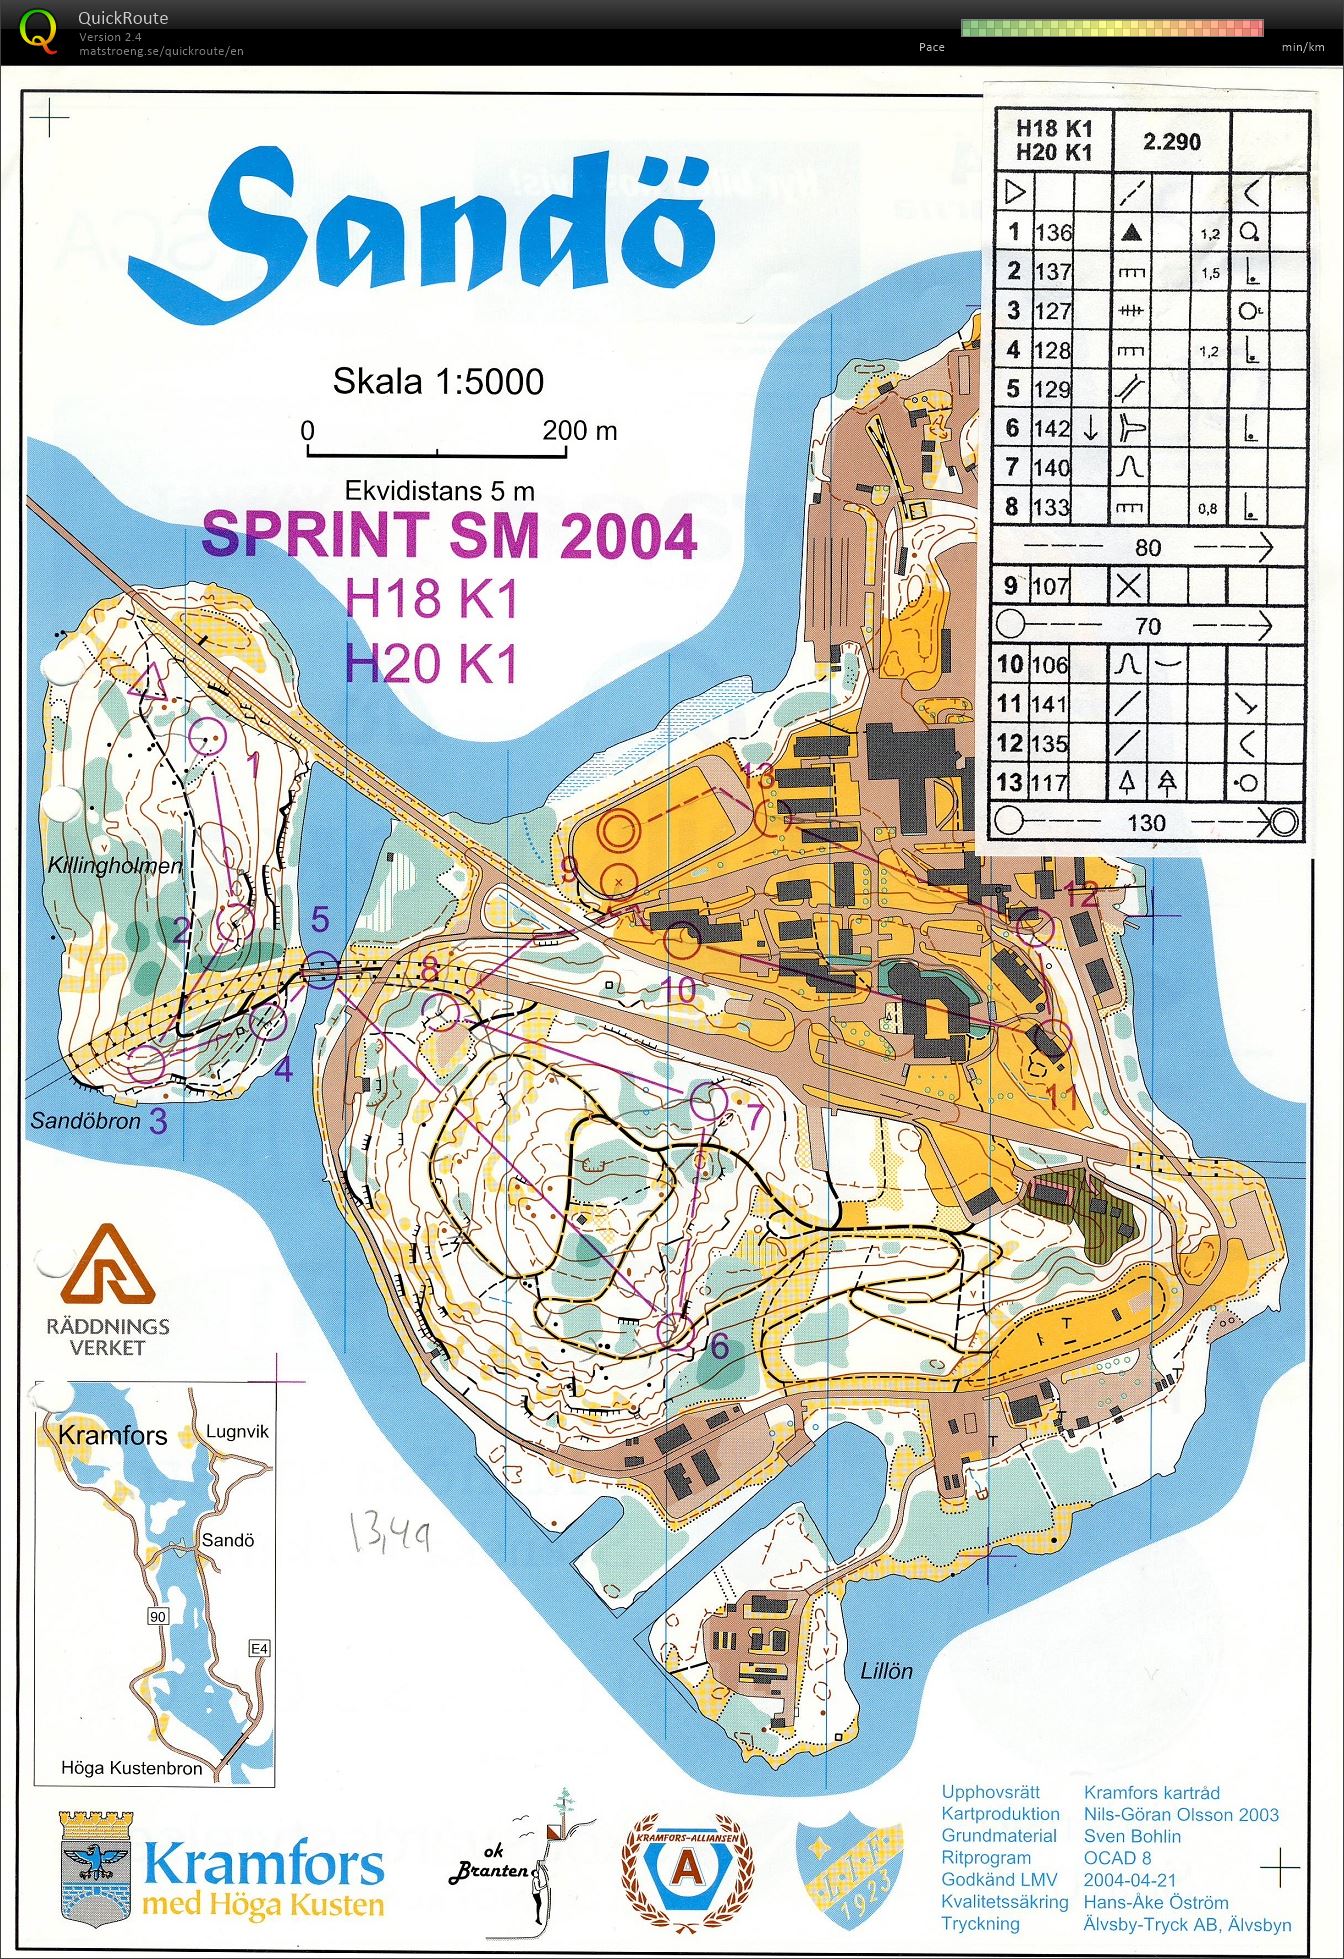 Sprint-SM, kval (29-05-2004)